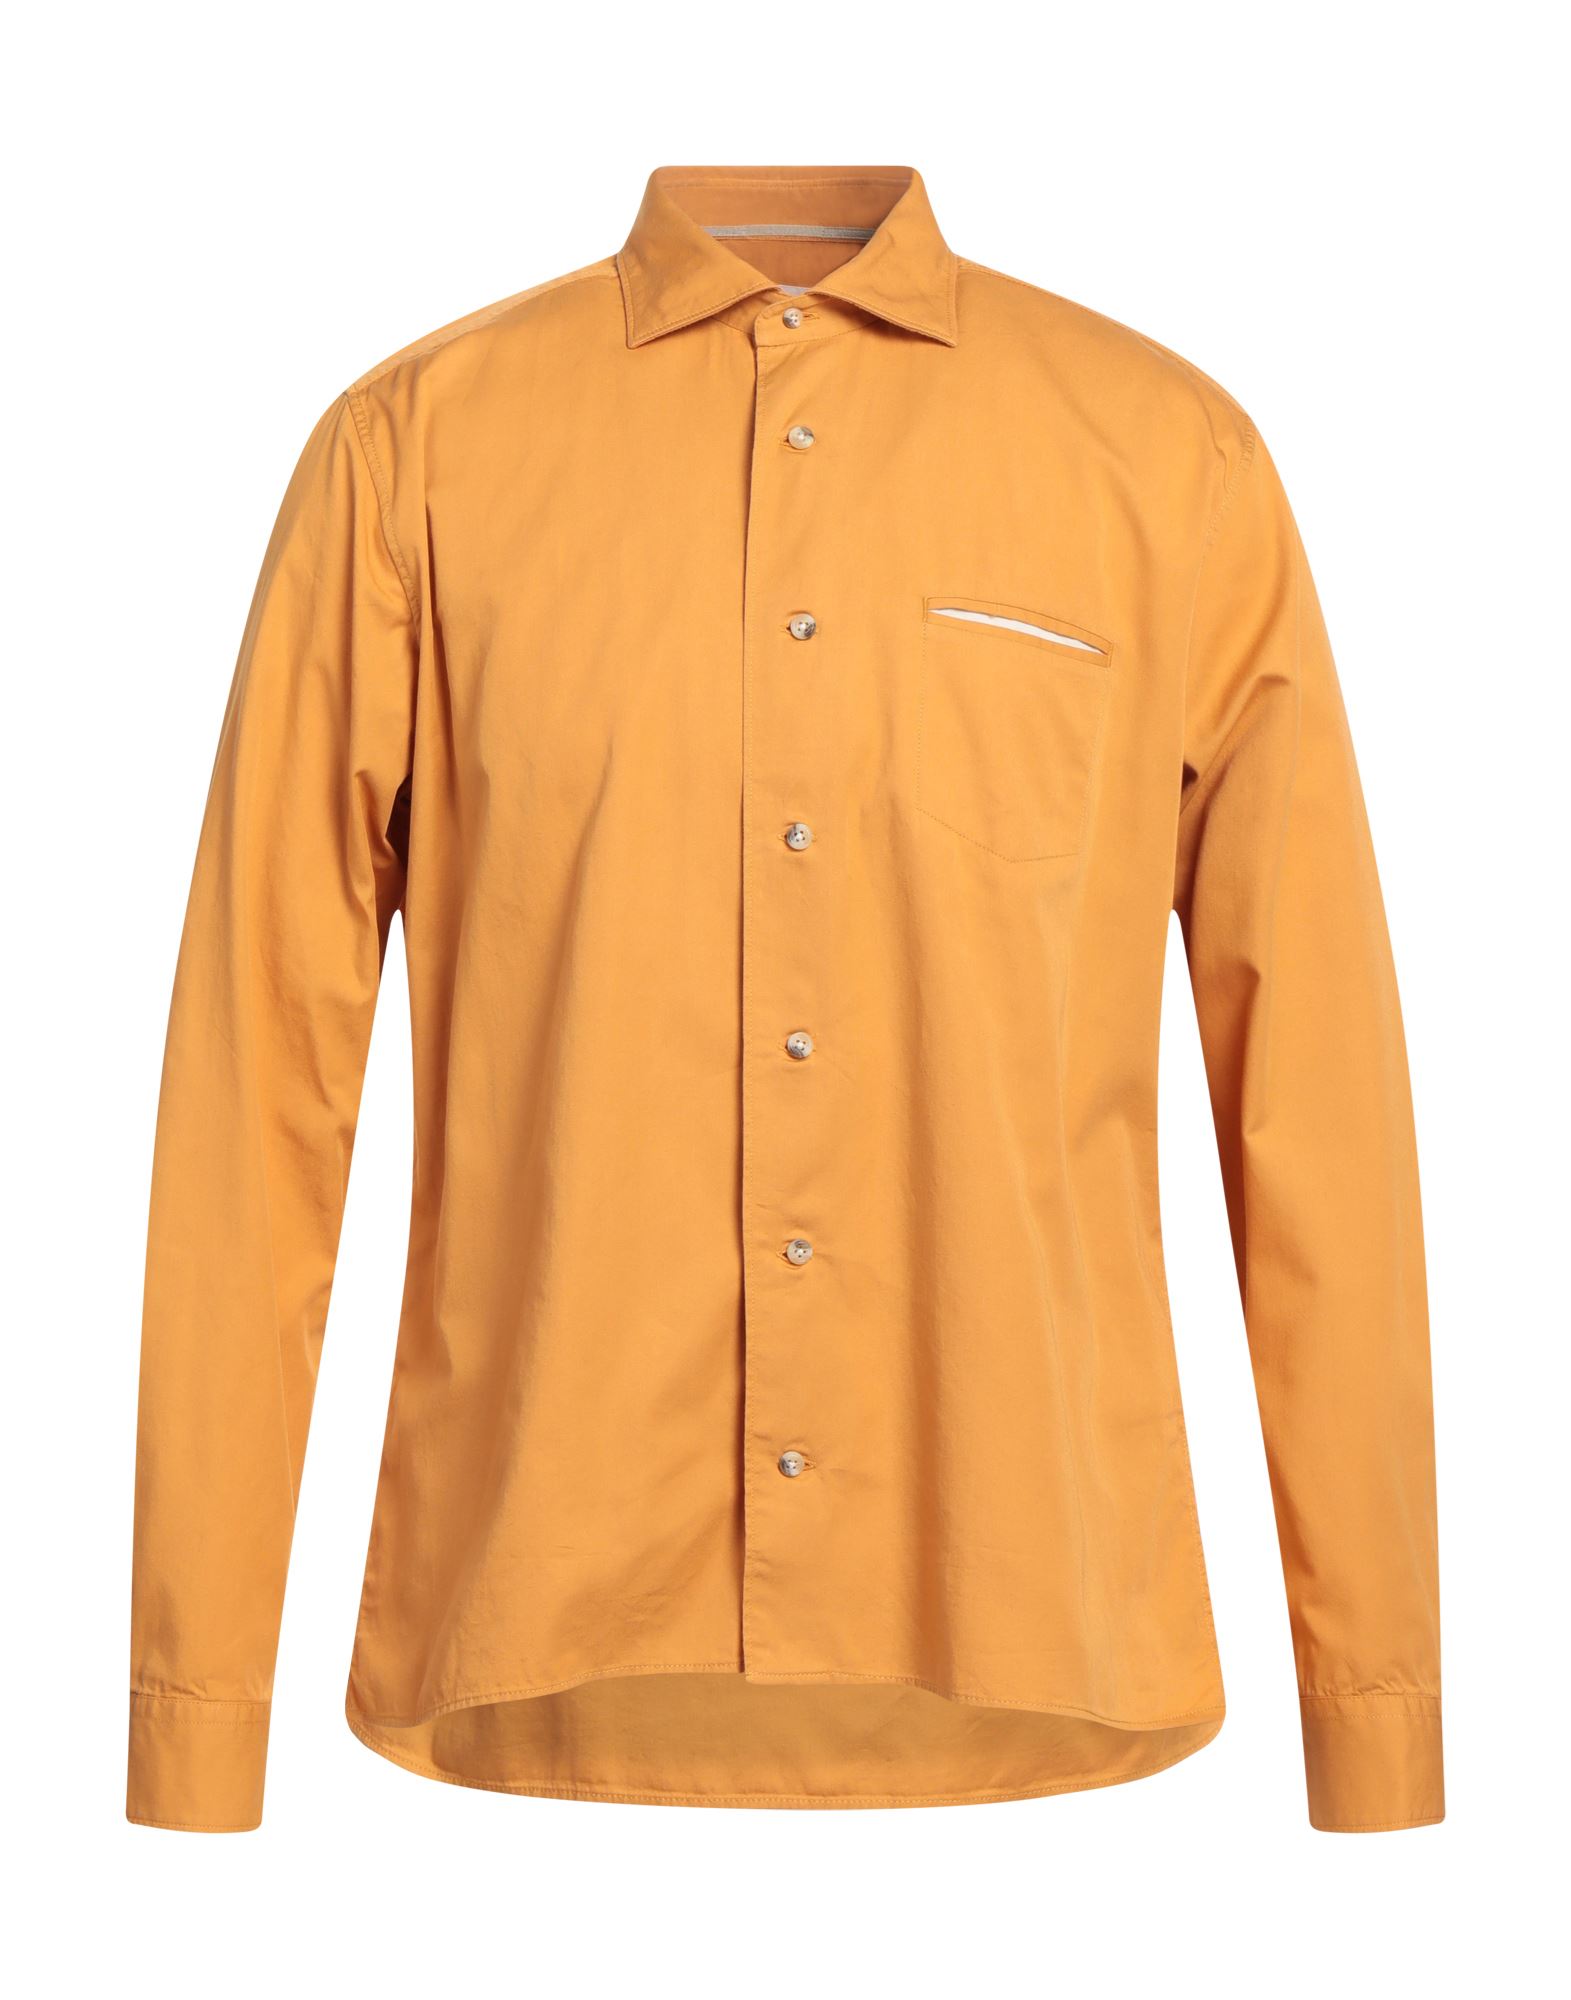 Tintoria Mattei 954 Shirts In Orange